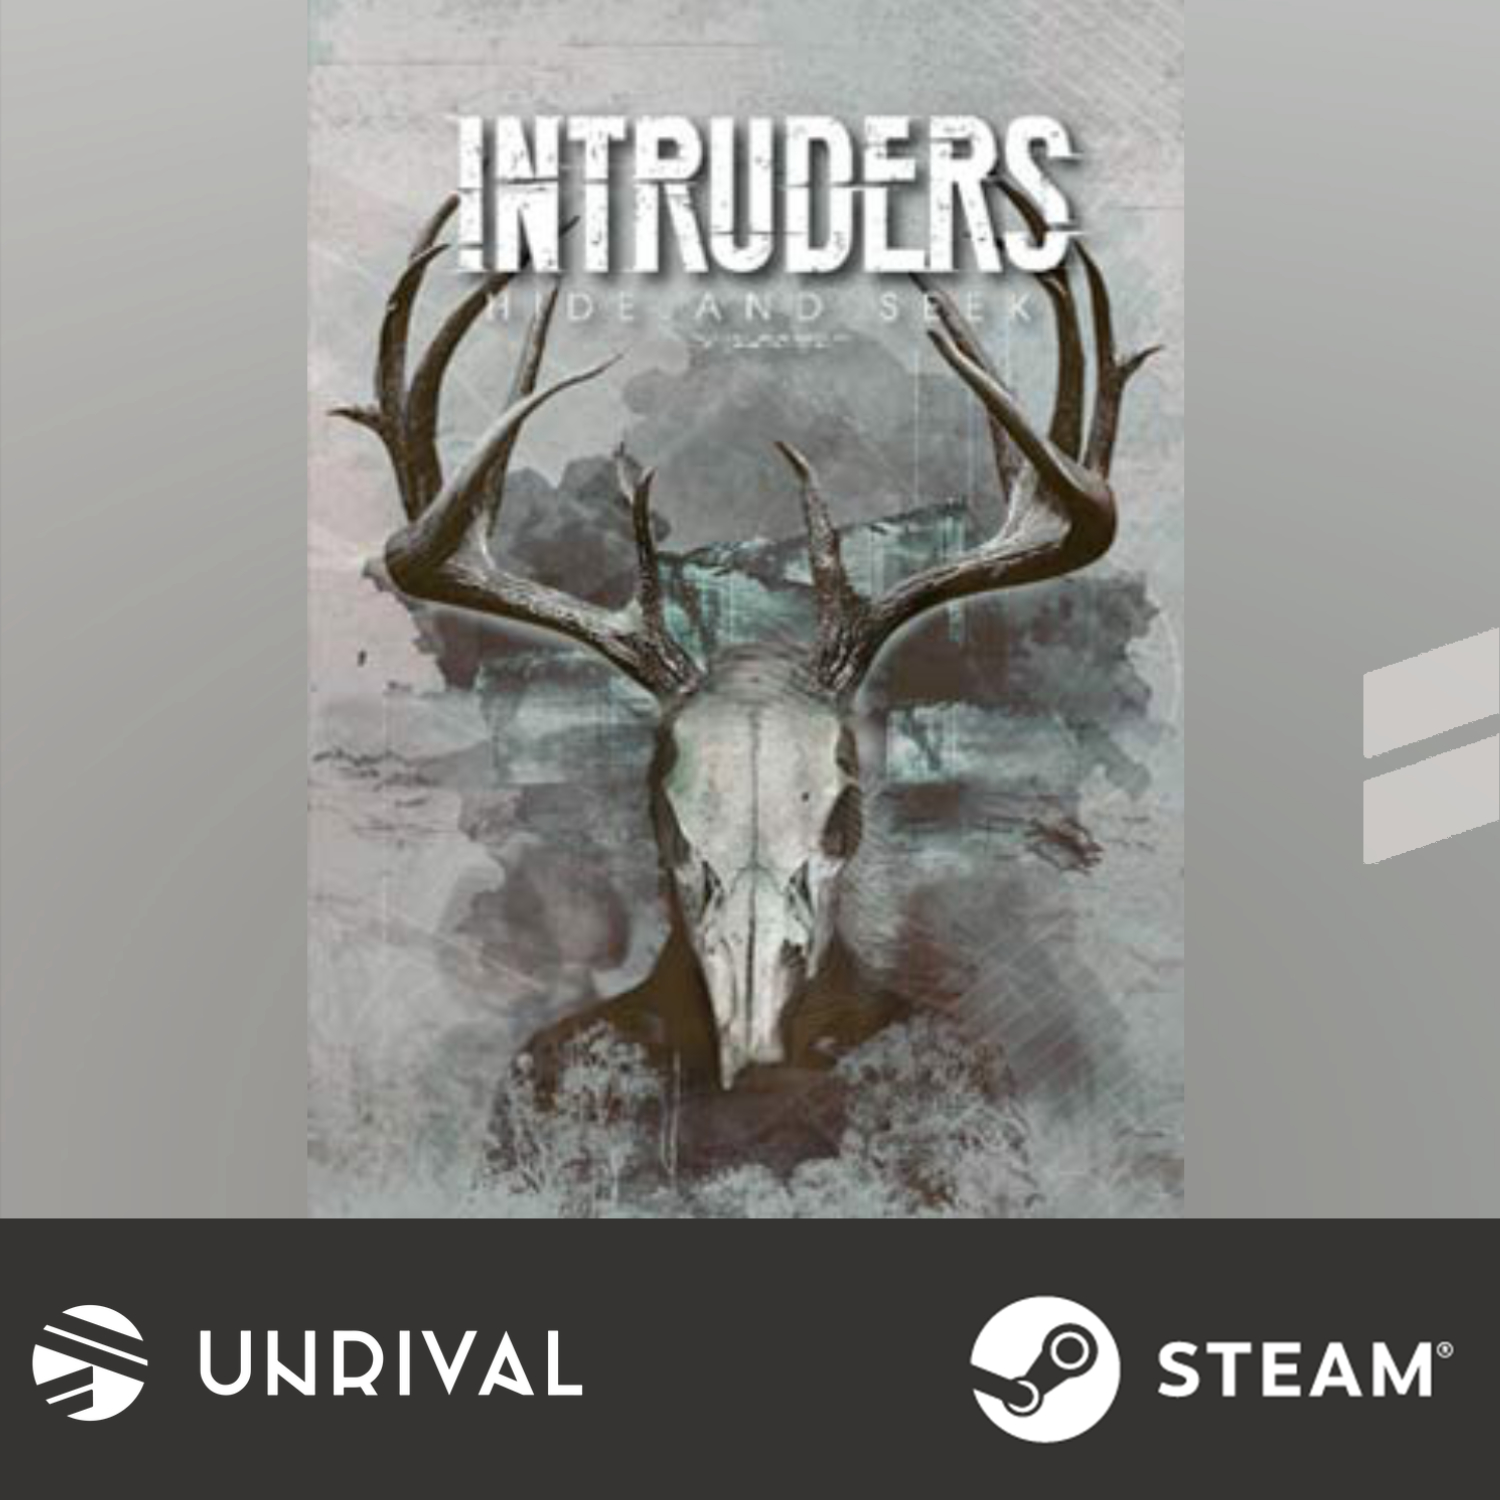 [Hot Sale] Intruders: Hide and Seek PC Digital Download Game (Single Player) - Unrival